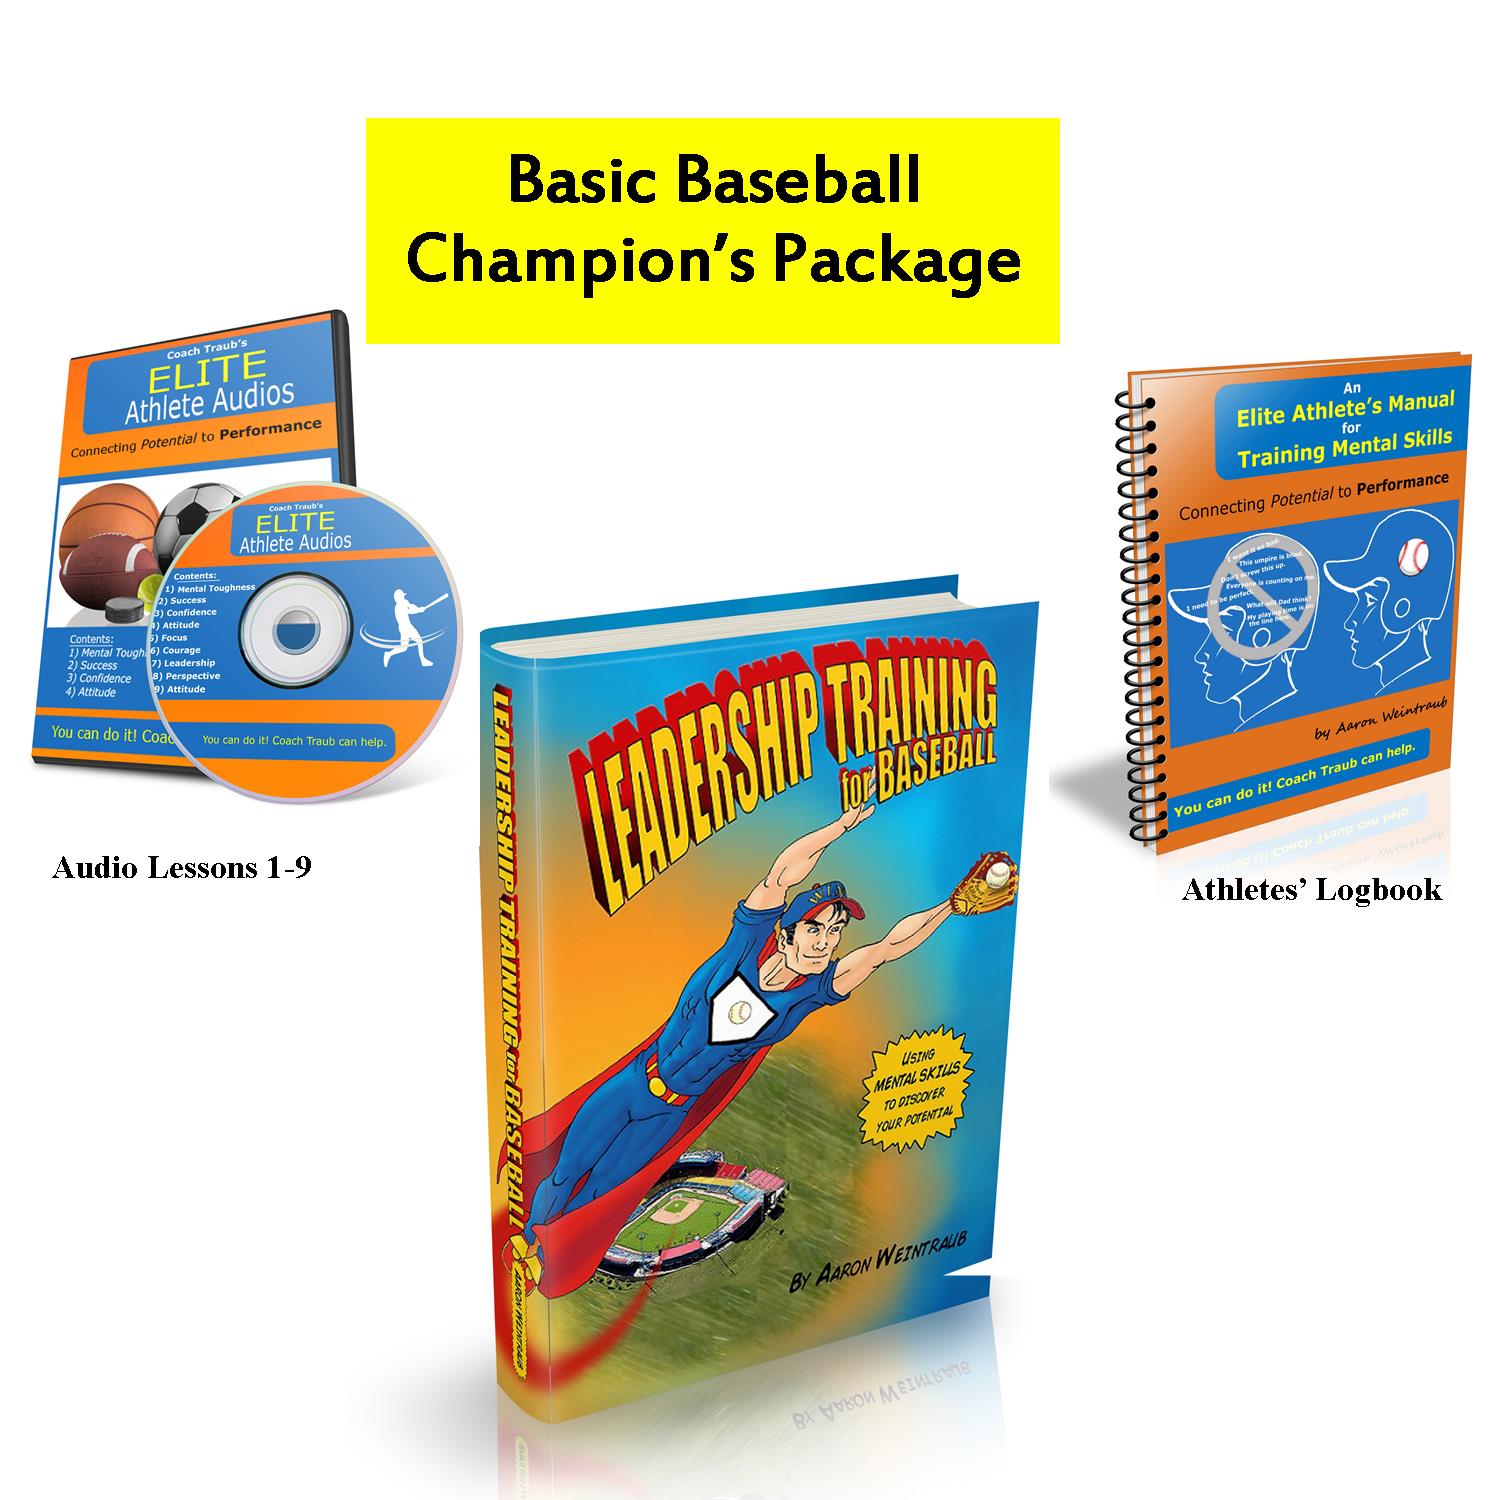 Basic Baseball Champions Package